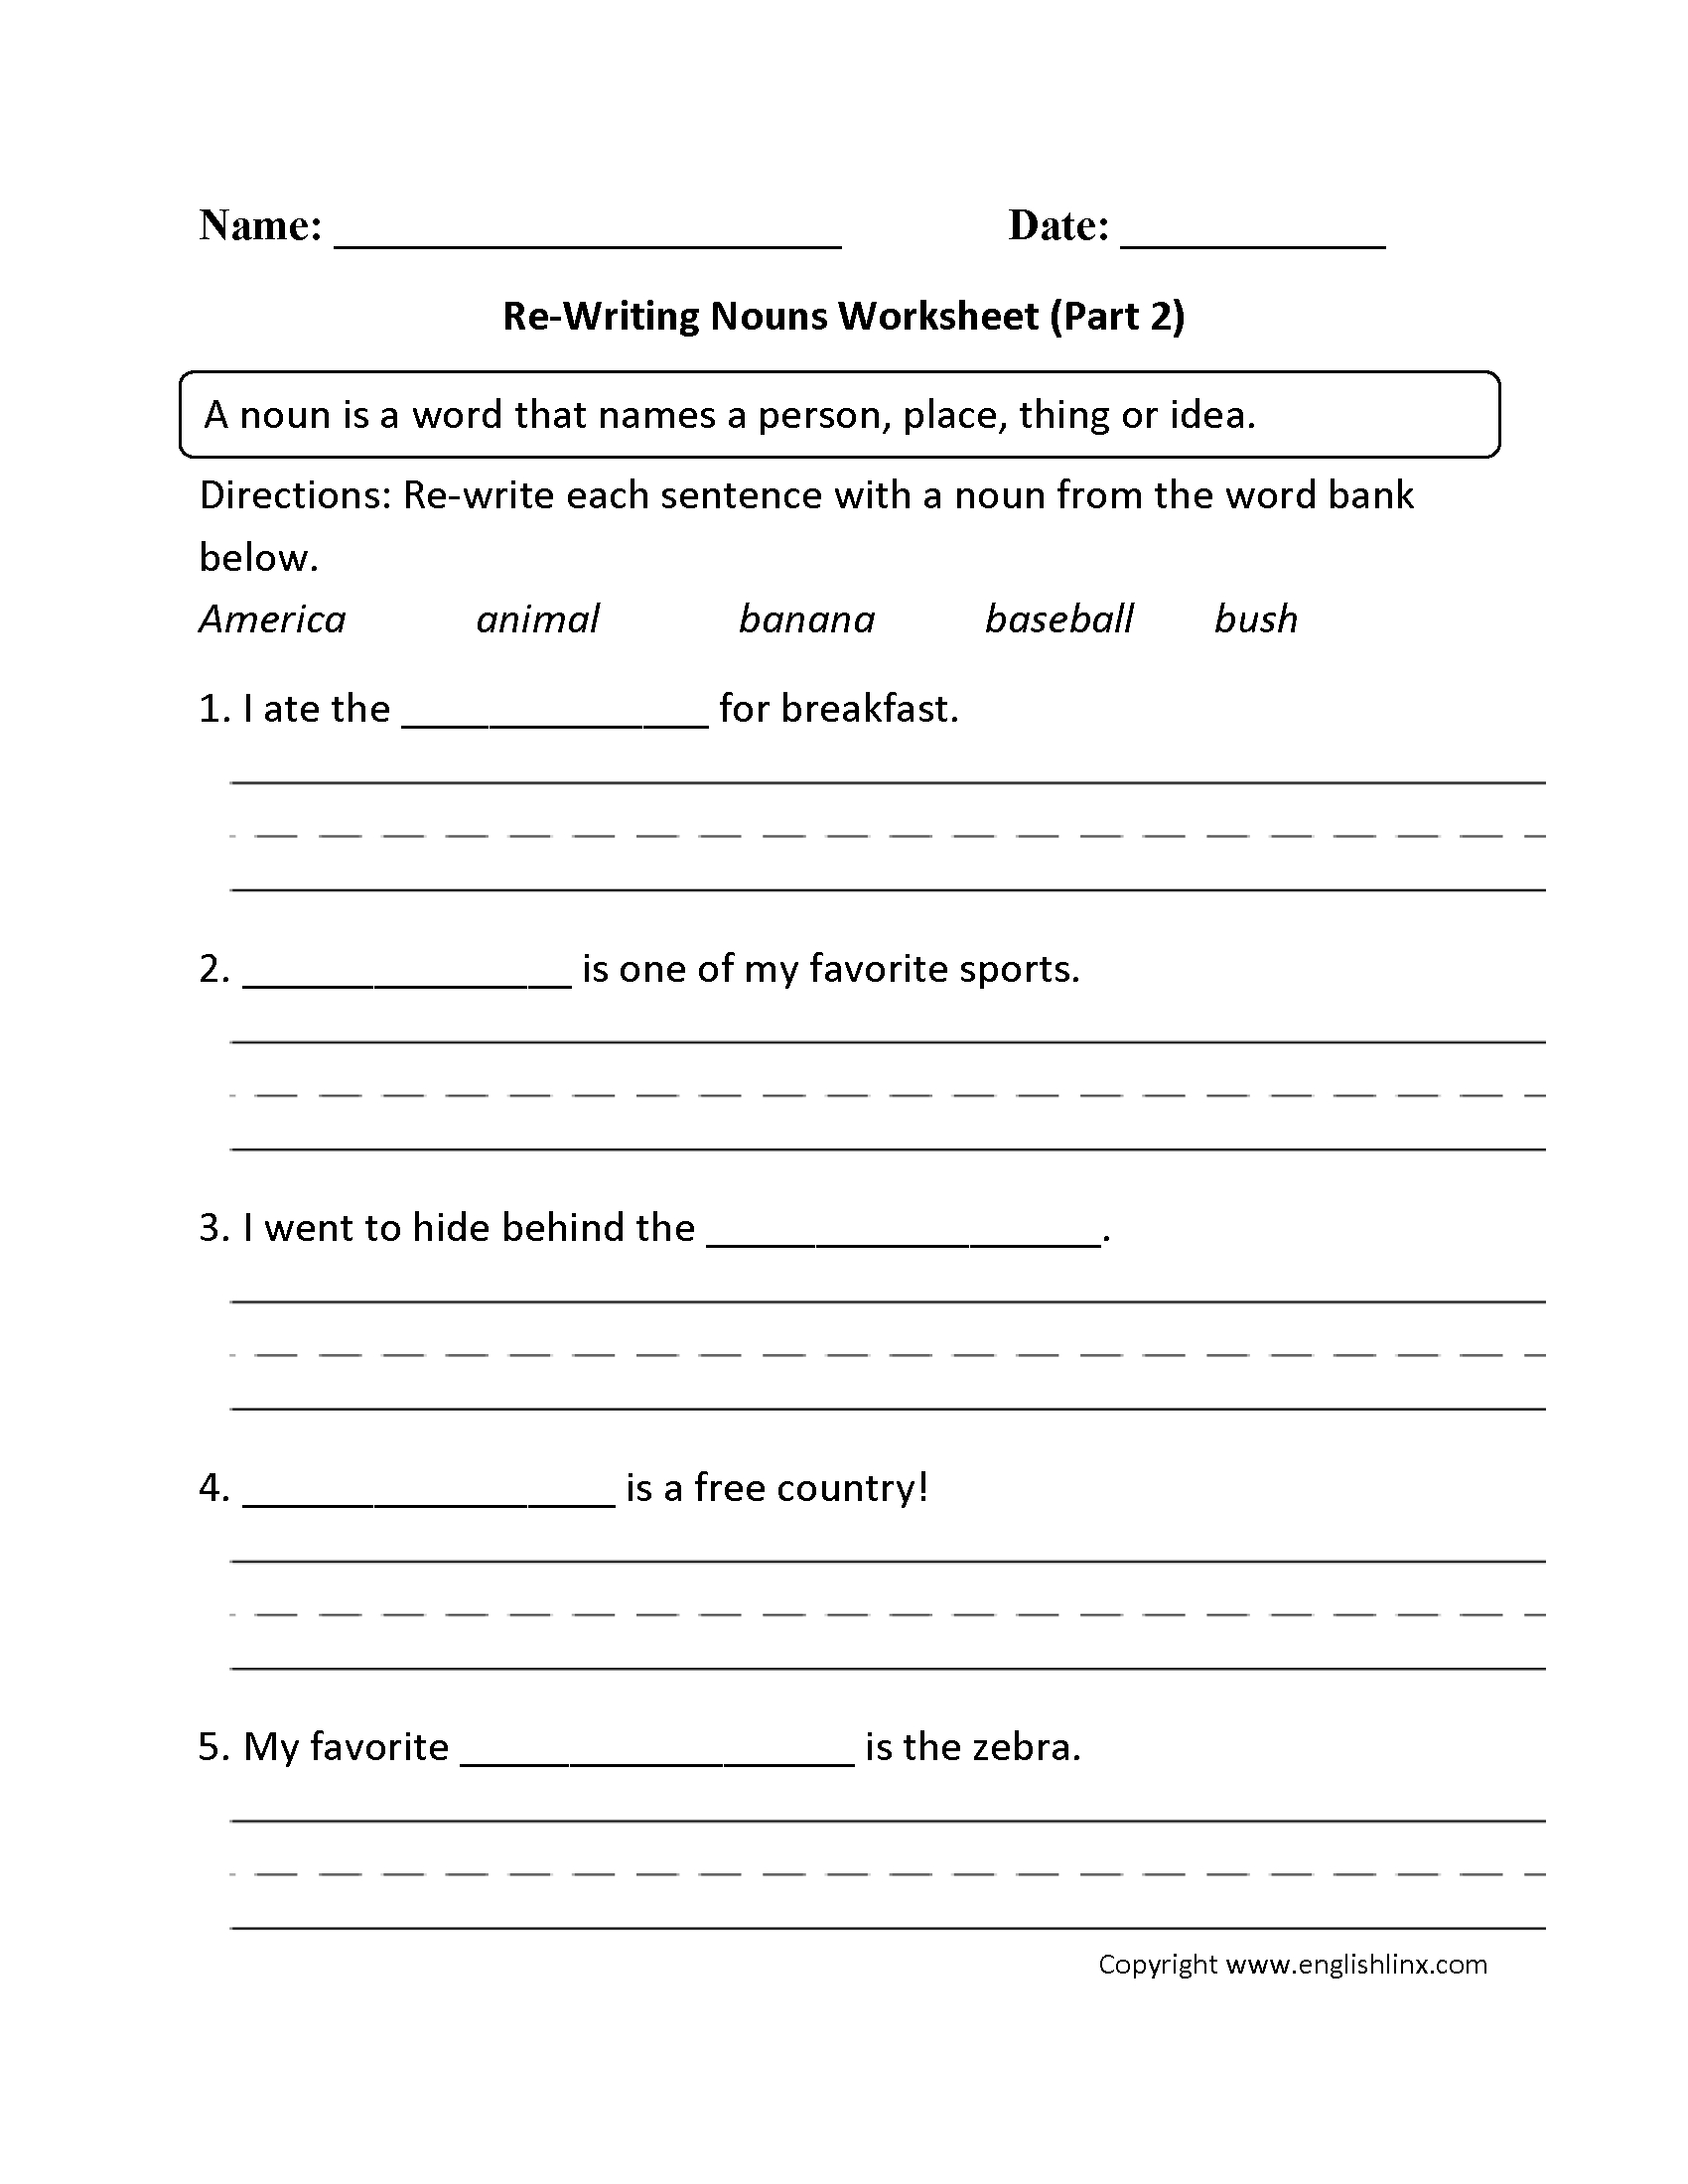 plural-nouns-worksheets-3rd-grade